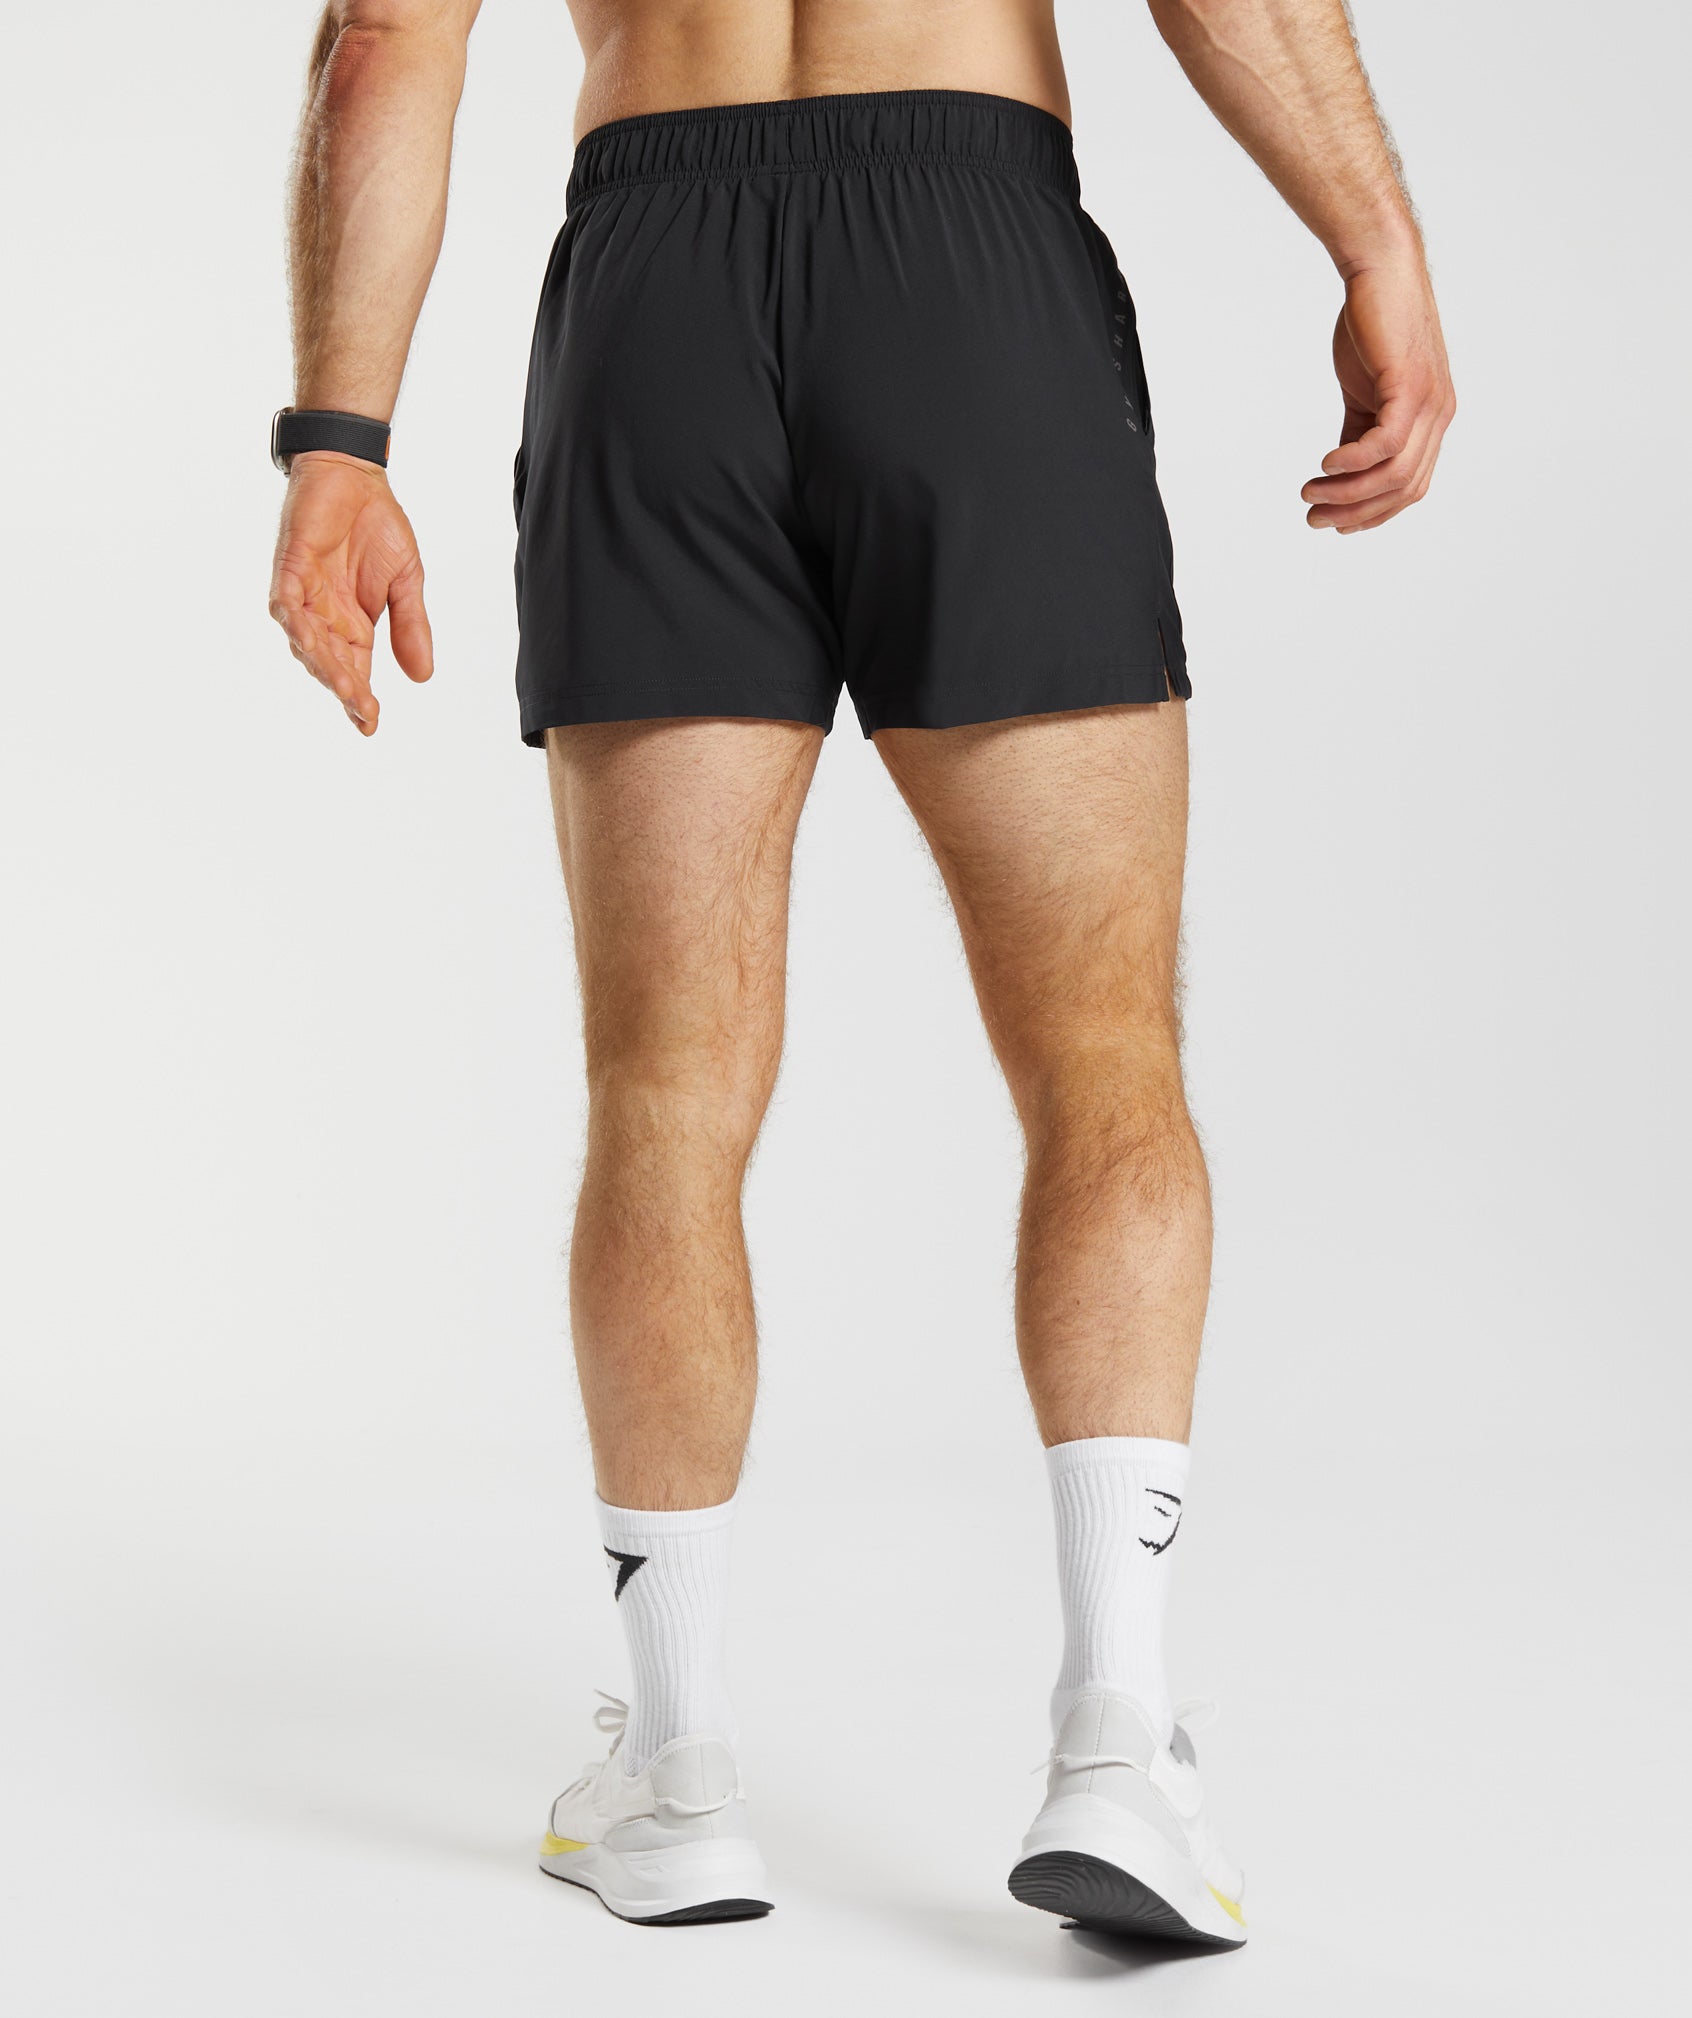 Men Fitness Workout Shorts Double Layer Inside Hidden Pocket Men Tights  Leggings Gym Sports Wear Summer Short Pants Quick Drying